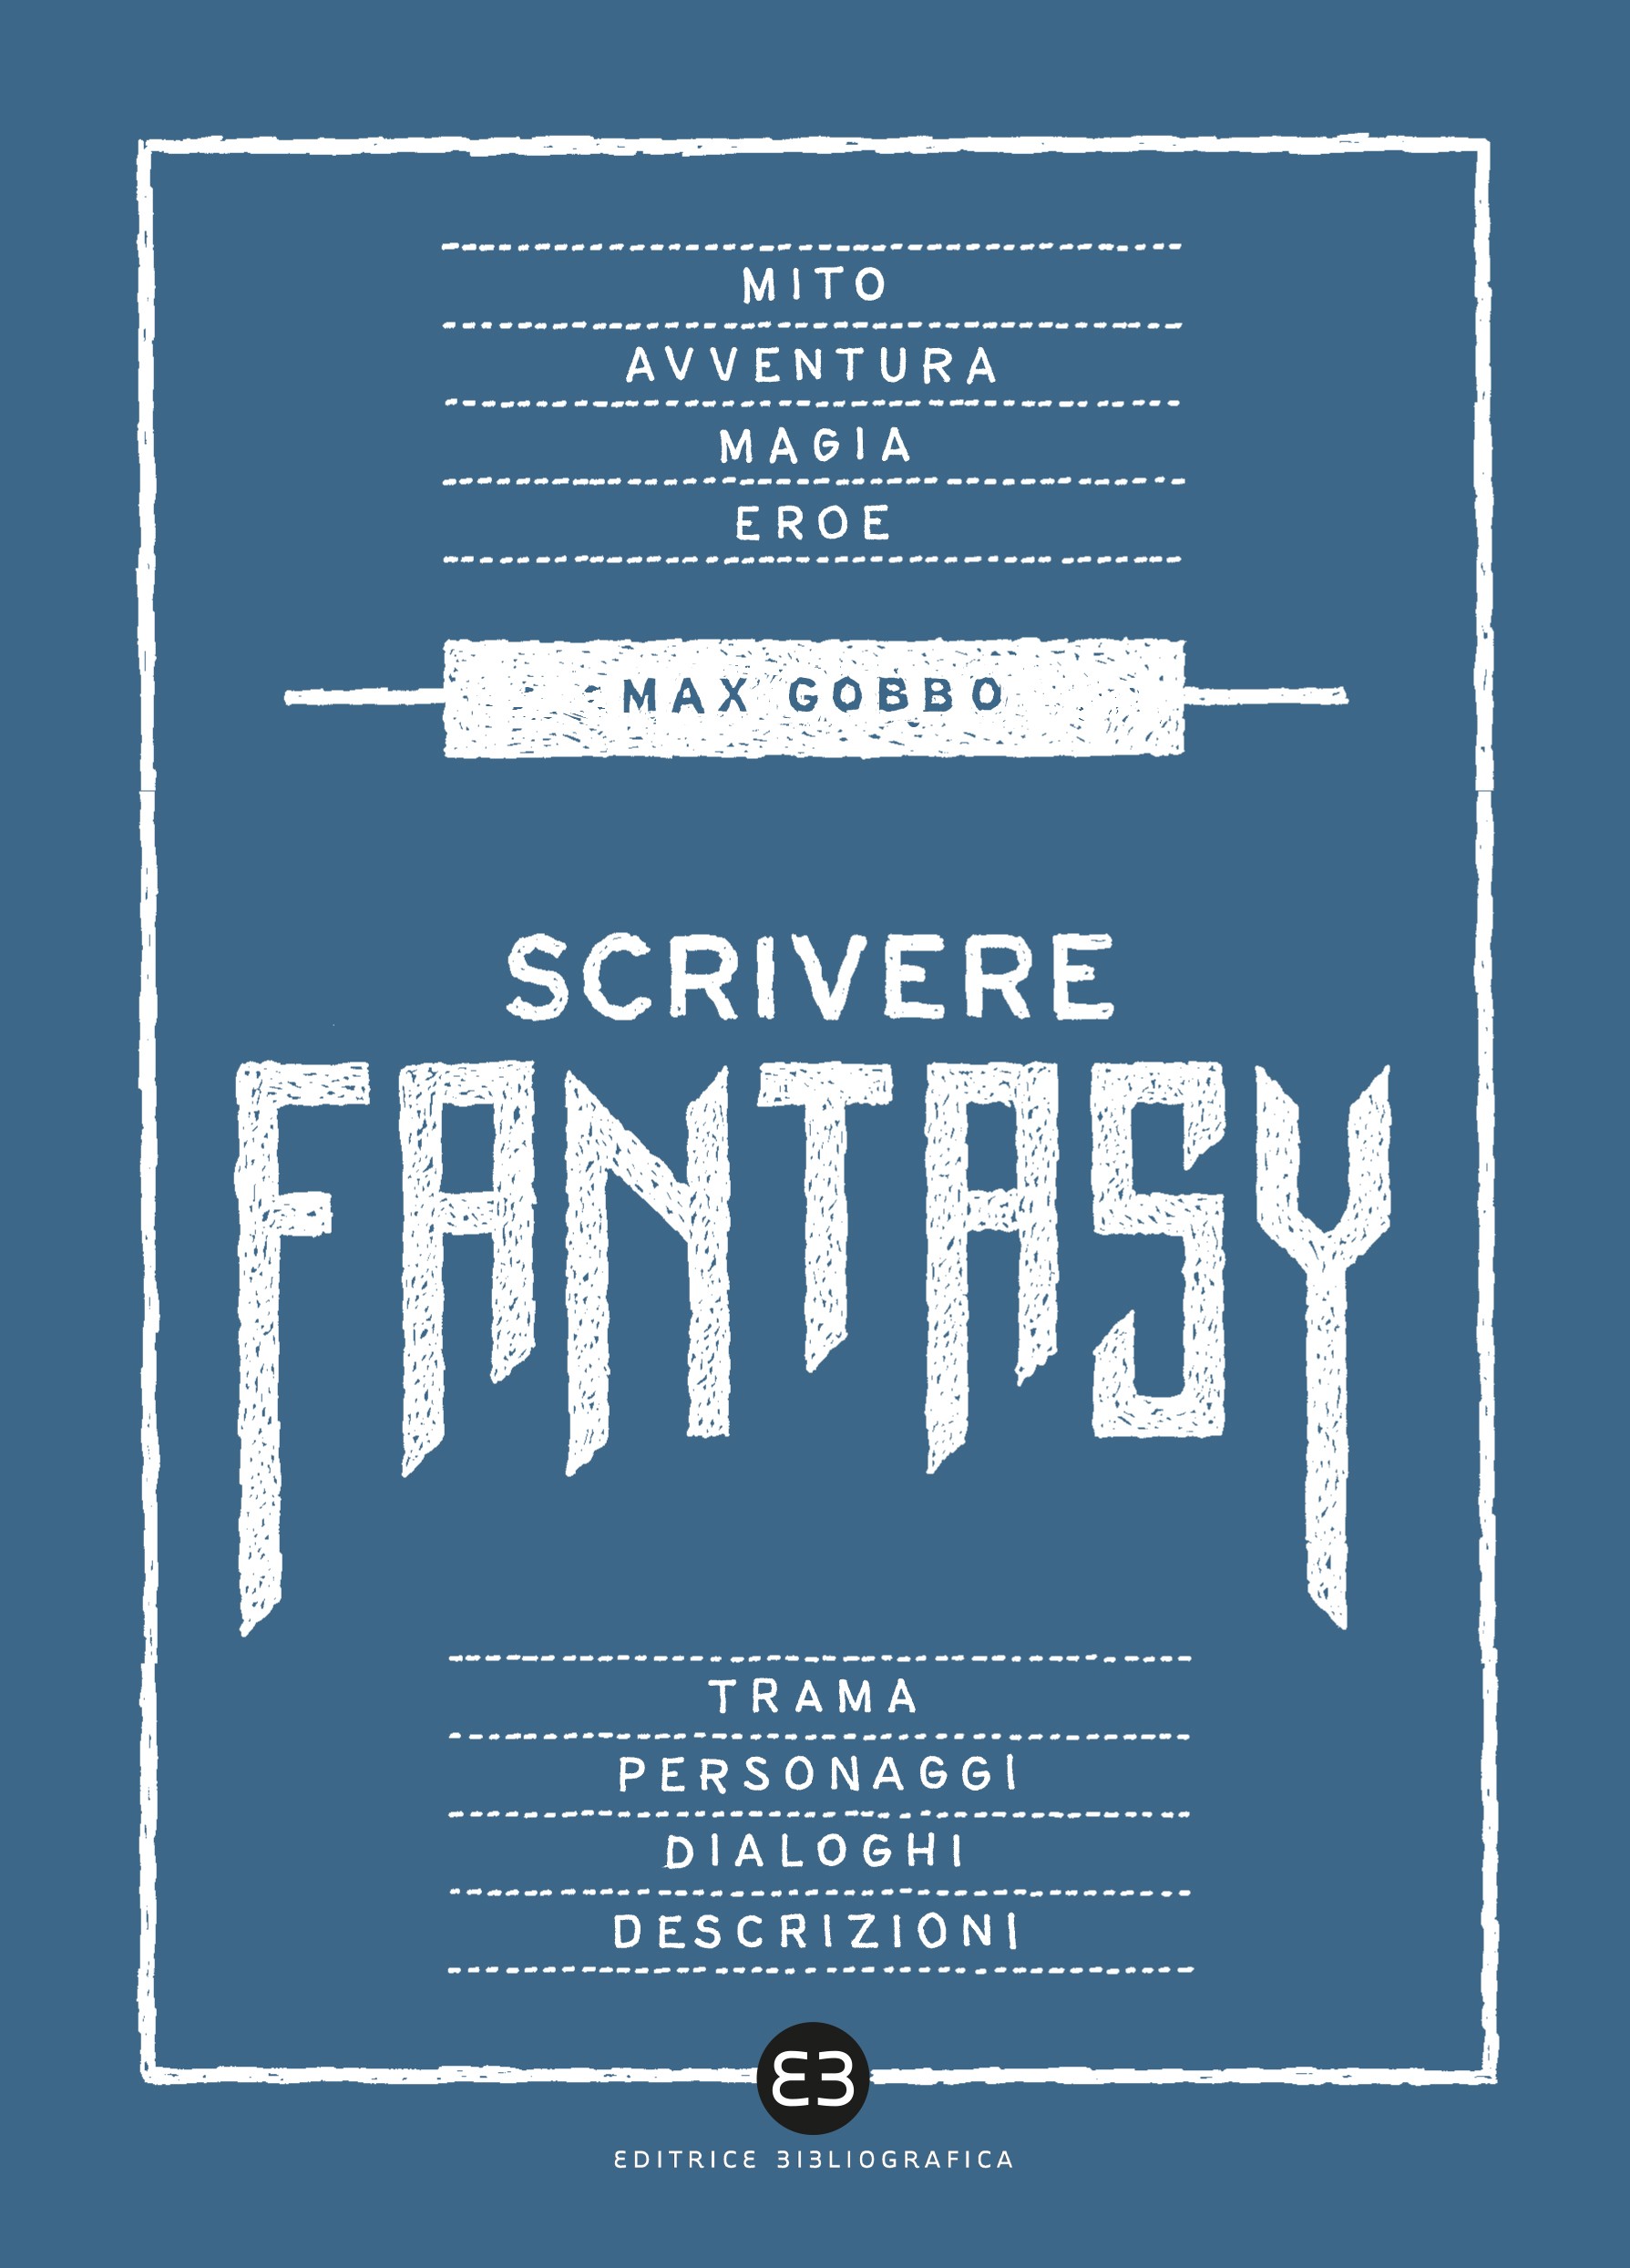 Scrivere fantasy - Librerie.coop